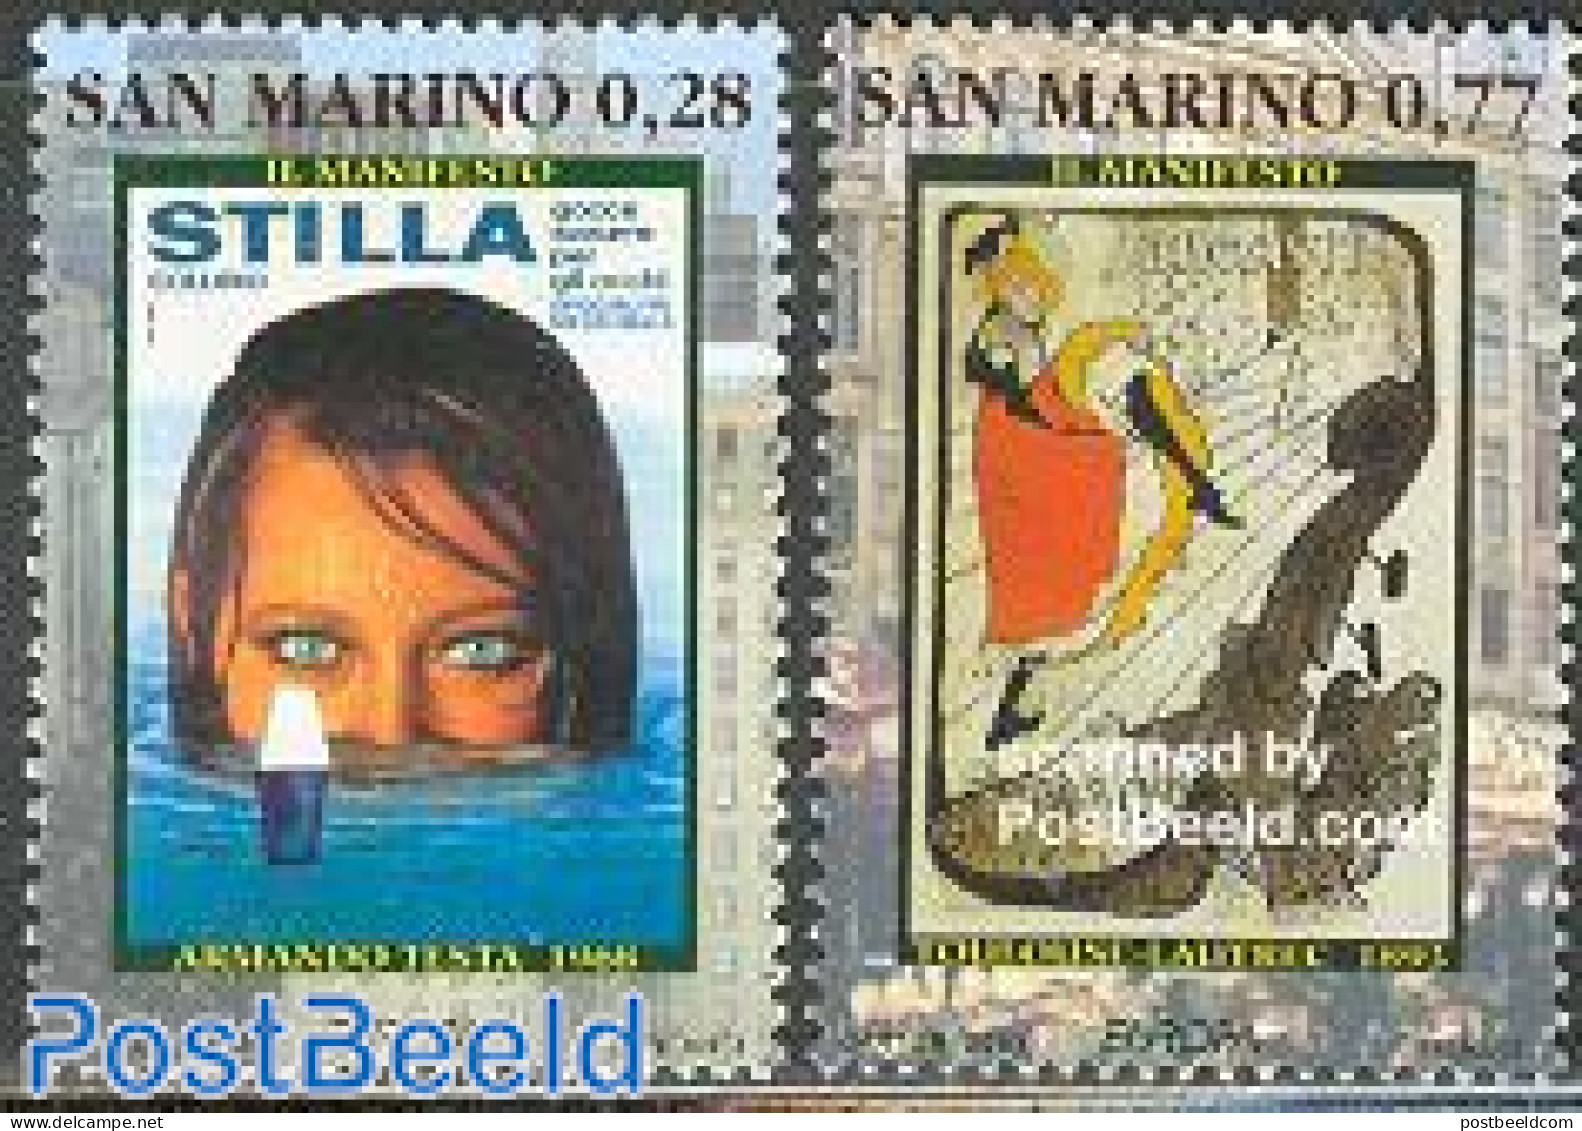 San Marino 2003 Europa, Poster Art 2v, Mint NH, History - Europa (cept) - Art - Henri De Toulouse-Lautrec - Modern Art.. - Neufs